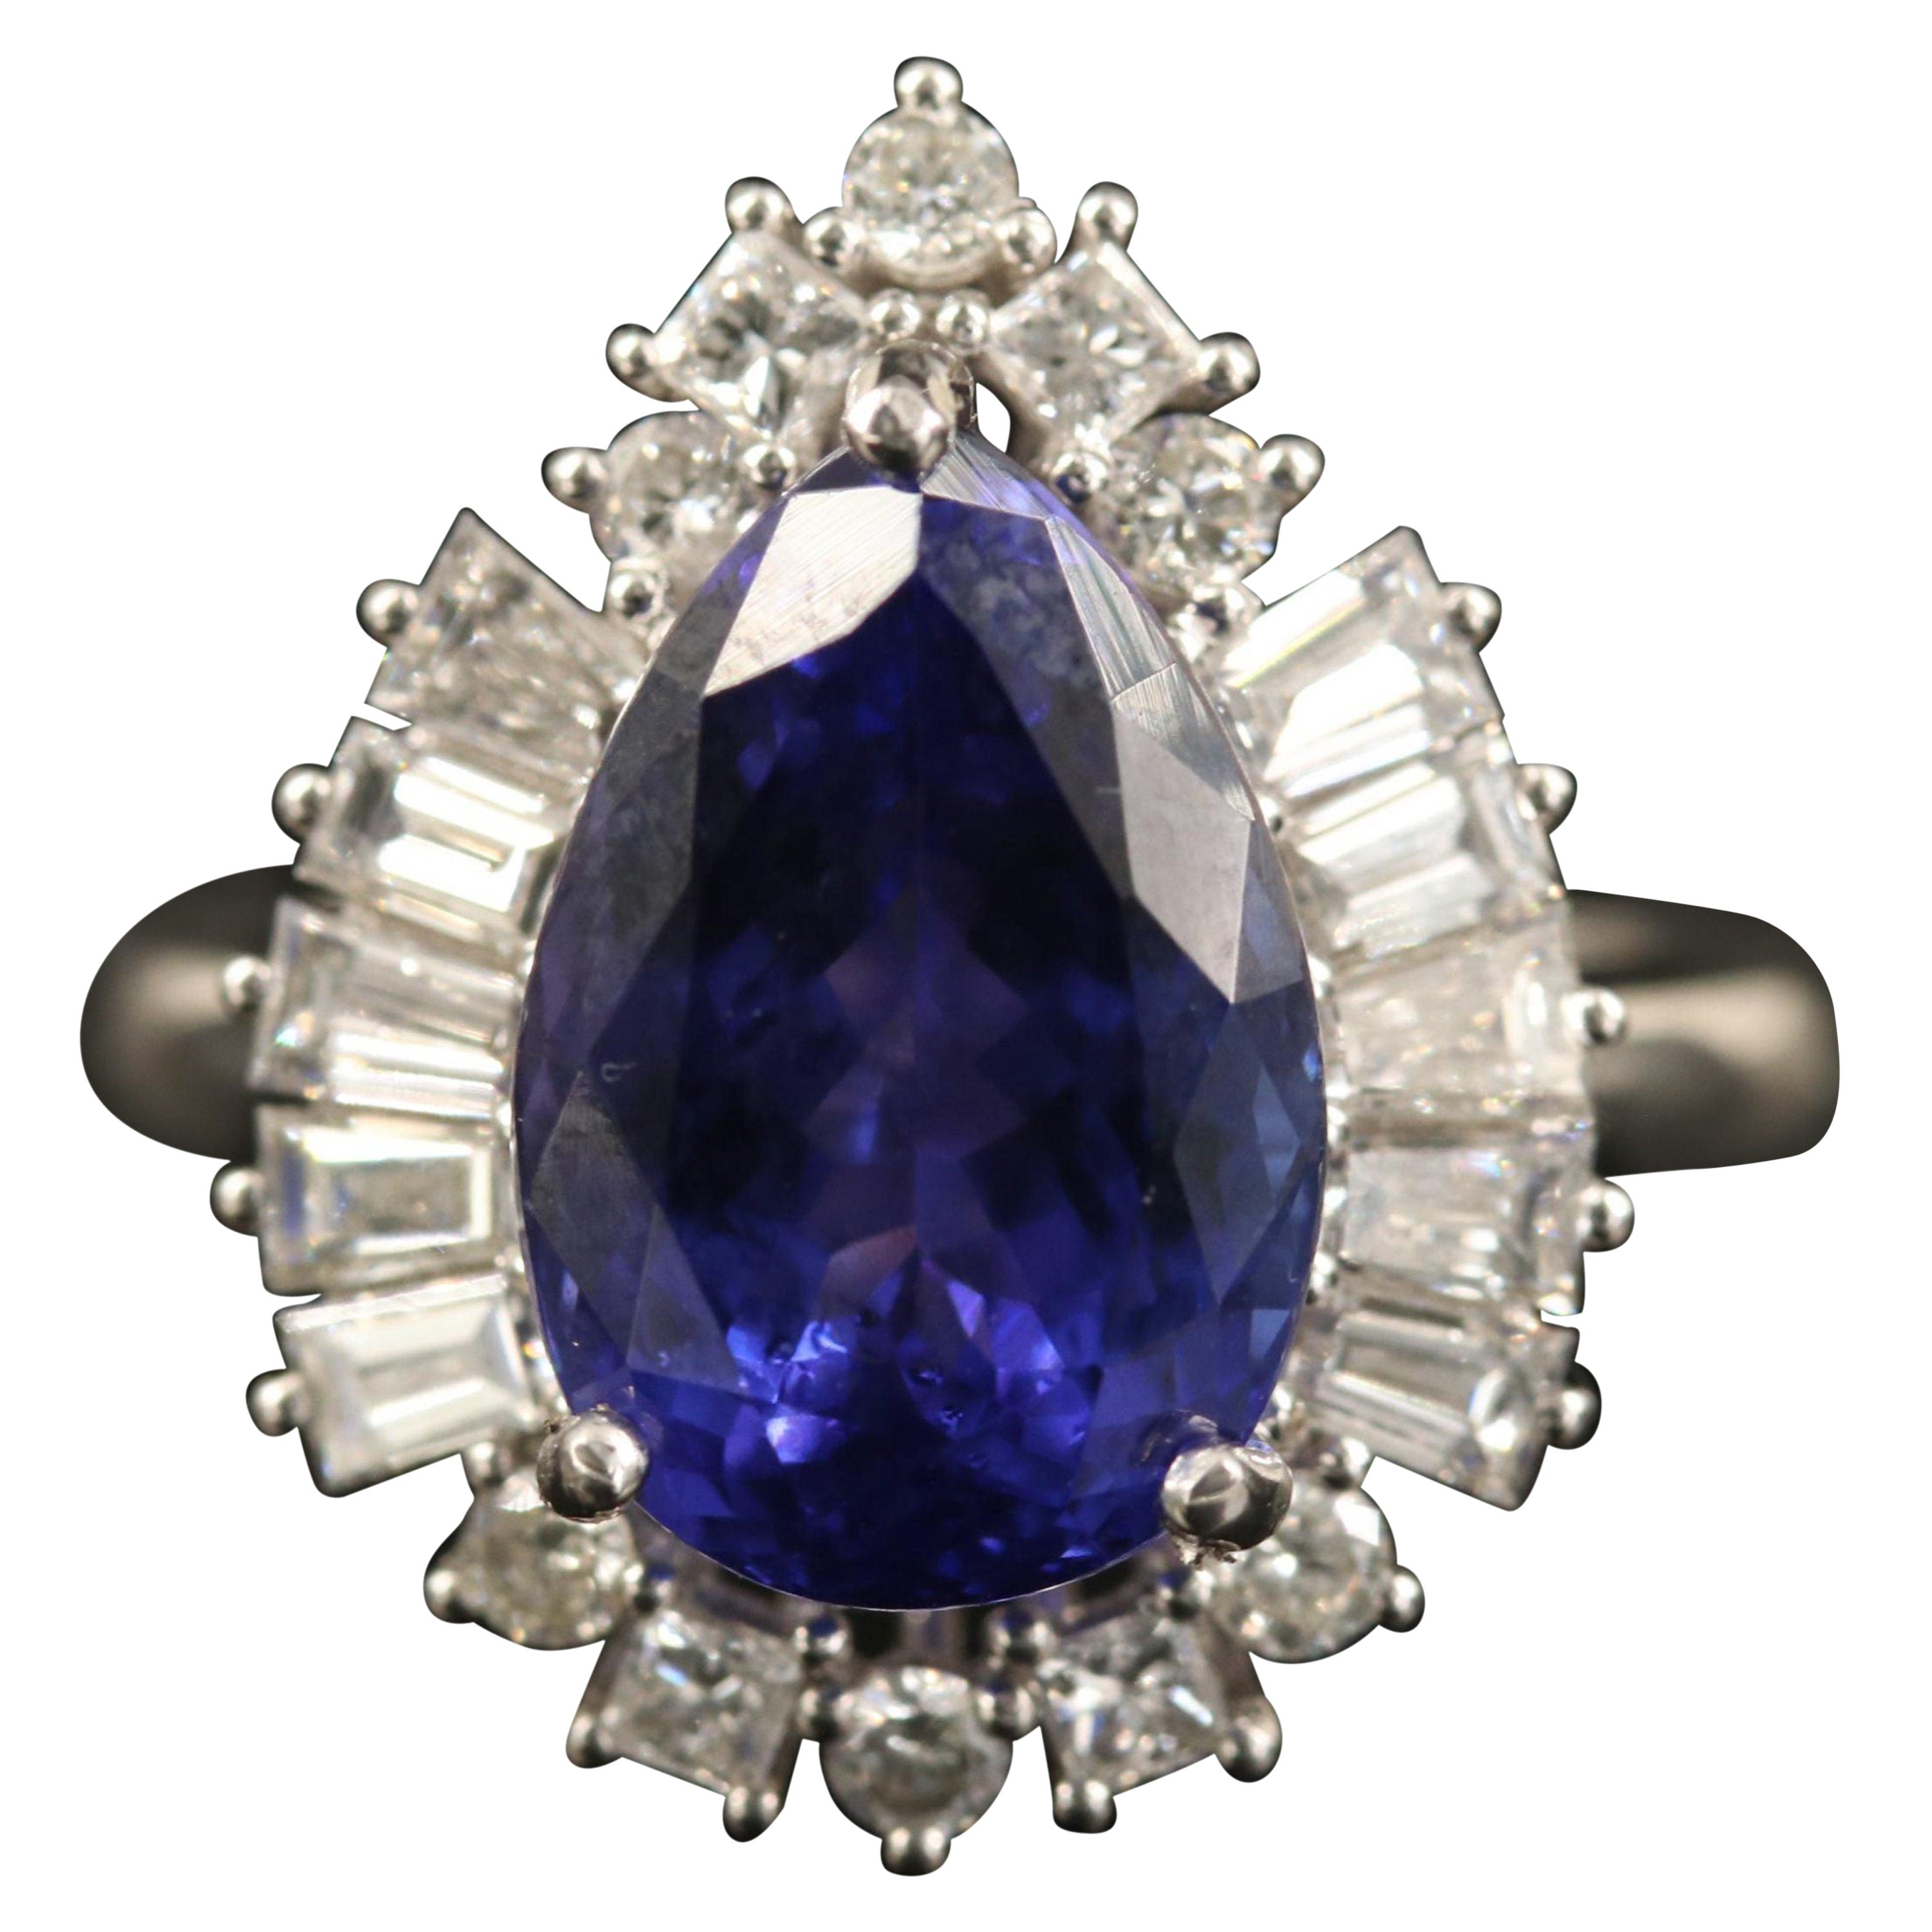 For Sale:  5.9 Carat Pear Cut Tanzanite Engagement Ring Art Deco Halo Diamond Wedding Ring